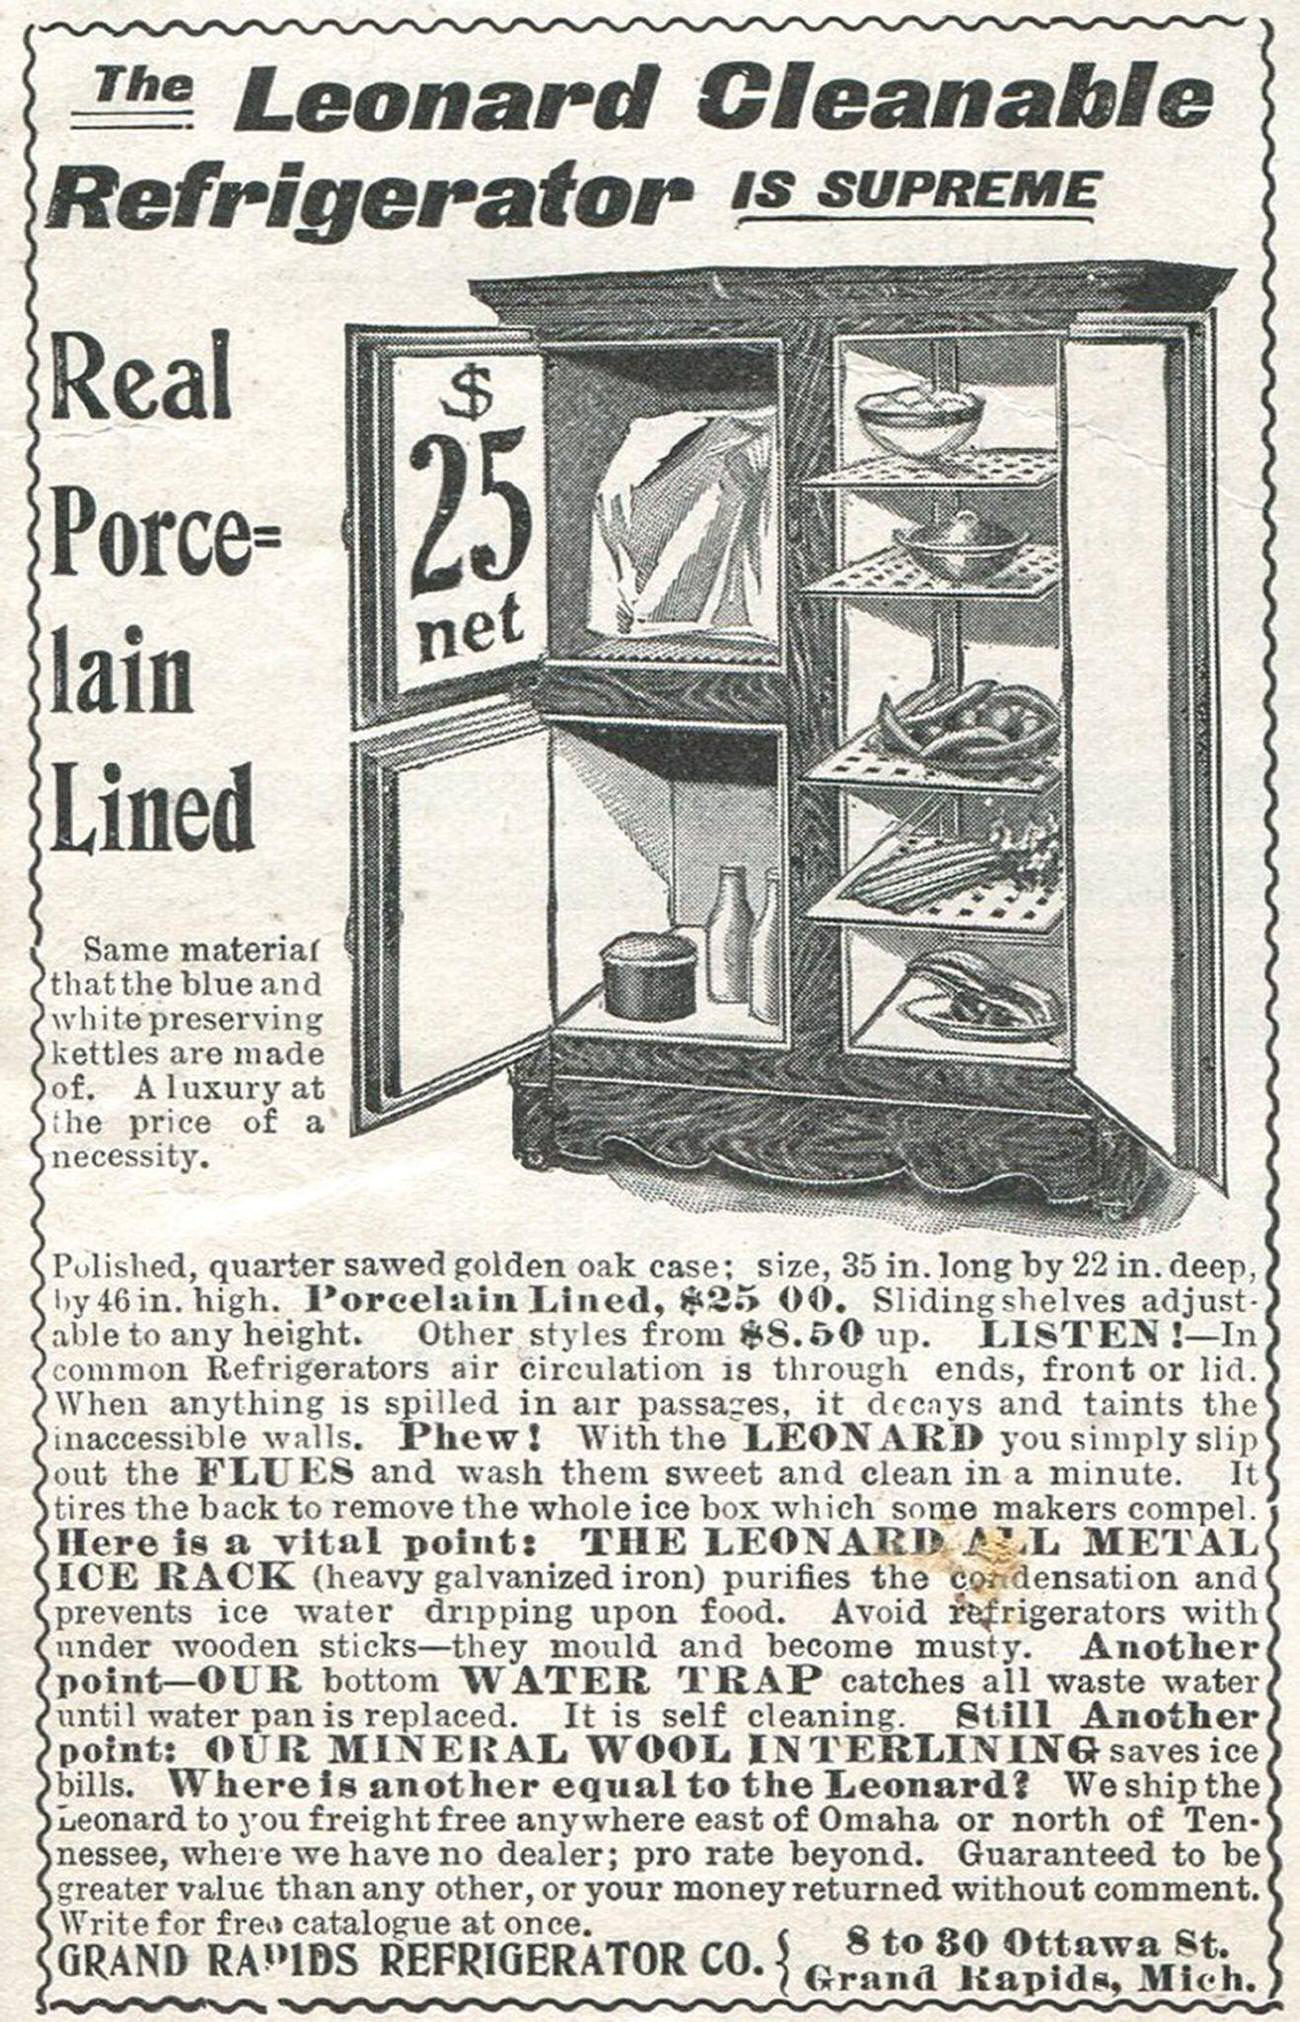 Grand Rapids Refrigerator Company ad, 1901.